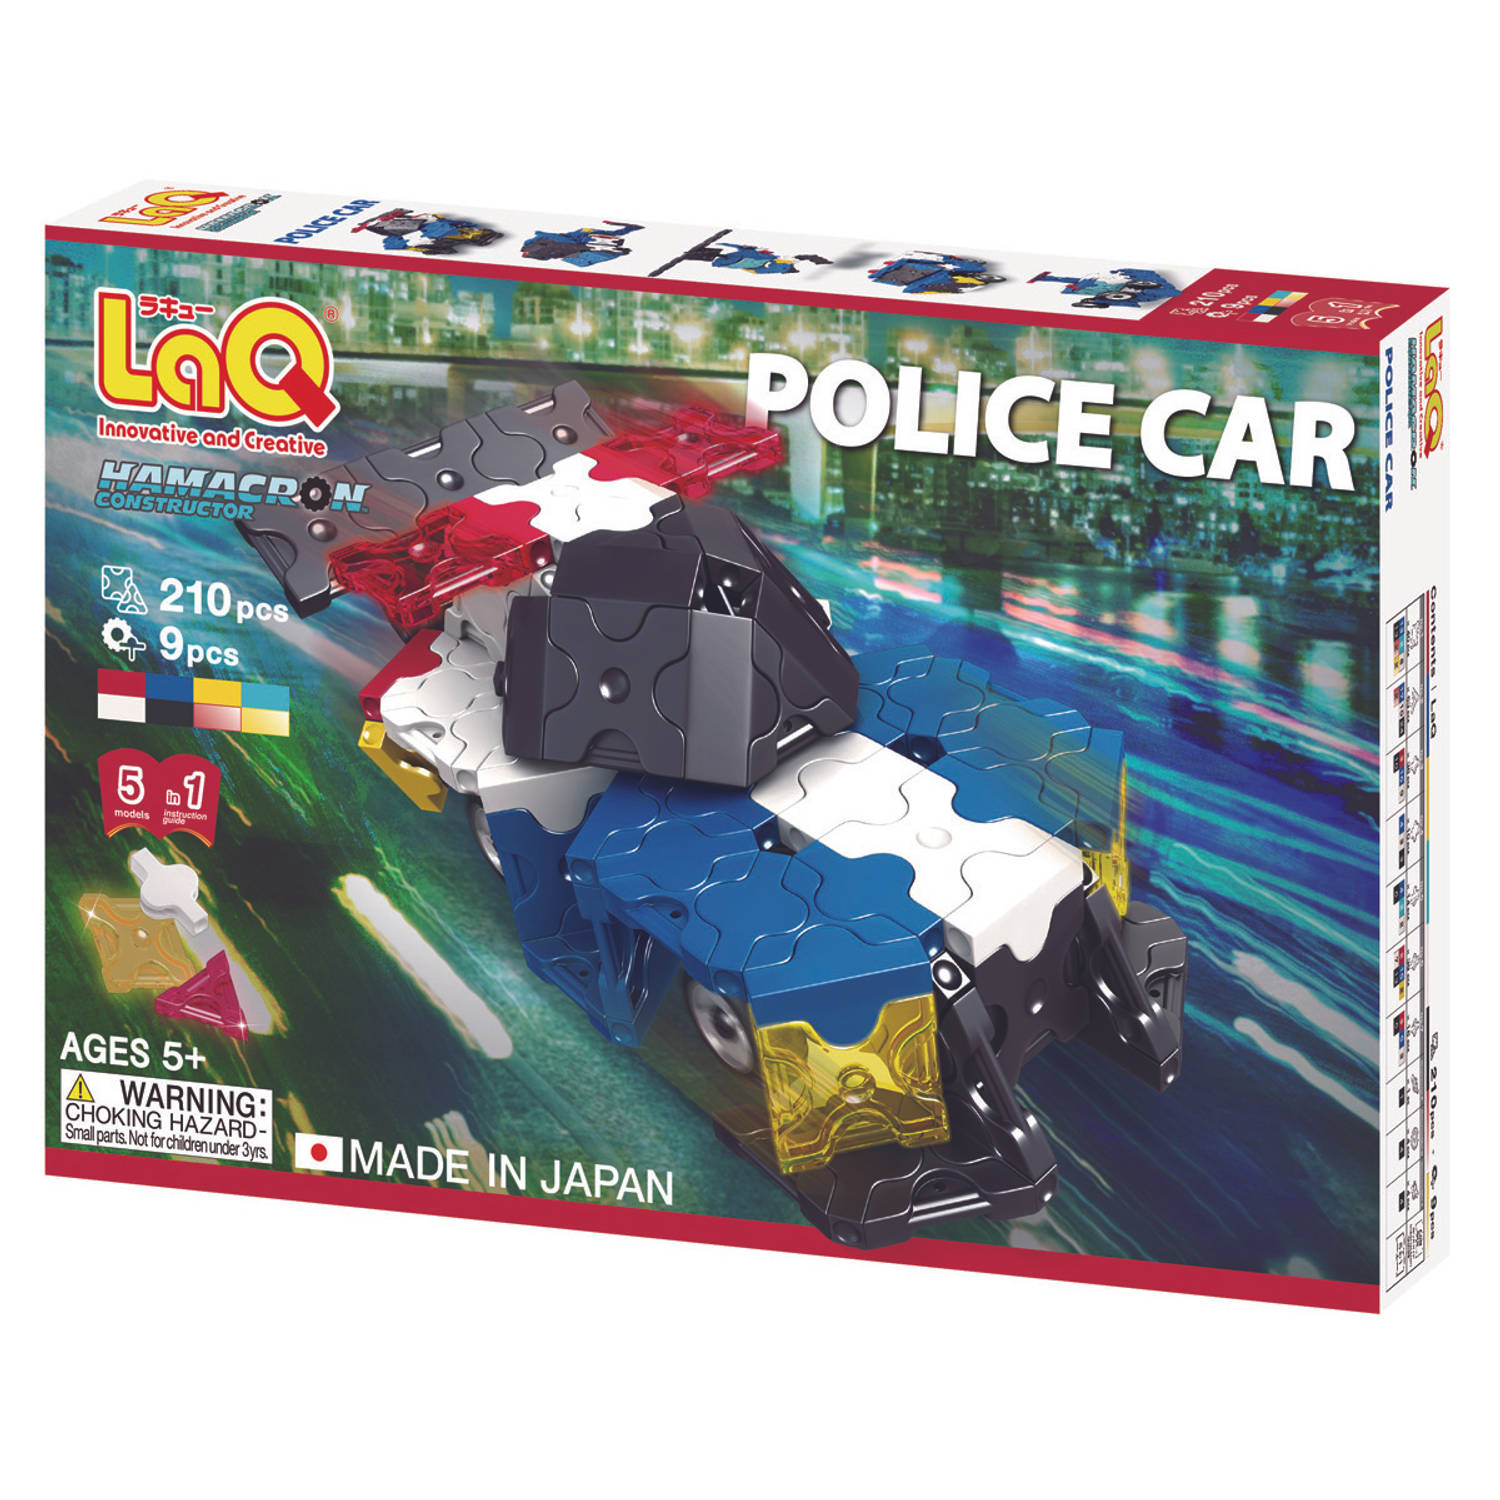 LaQ-Hamacron Constructer Police Car